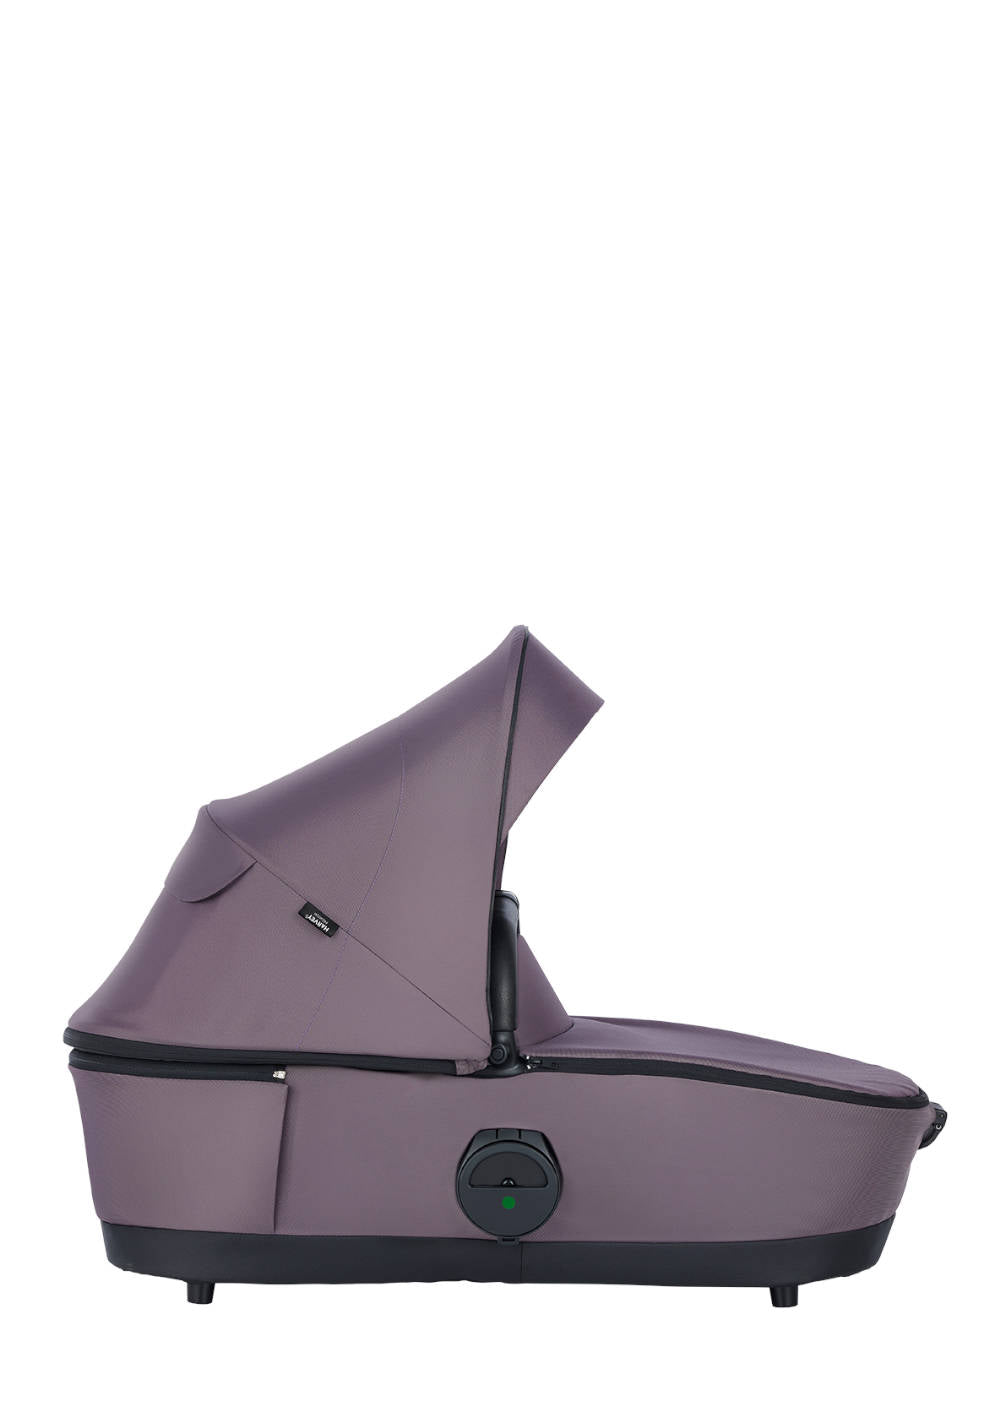 Harvey5 Kinderwagen-Set Premium Granite Purple